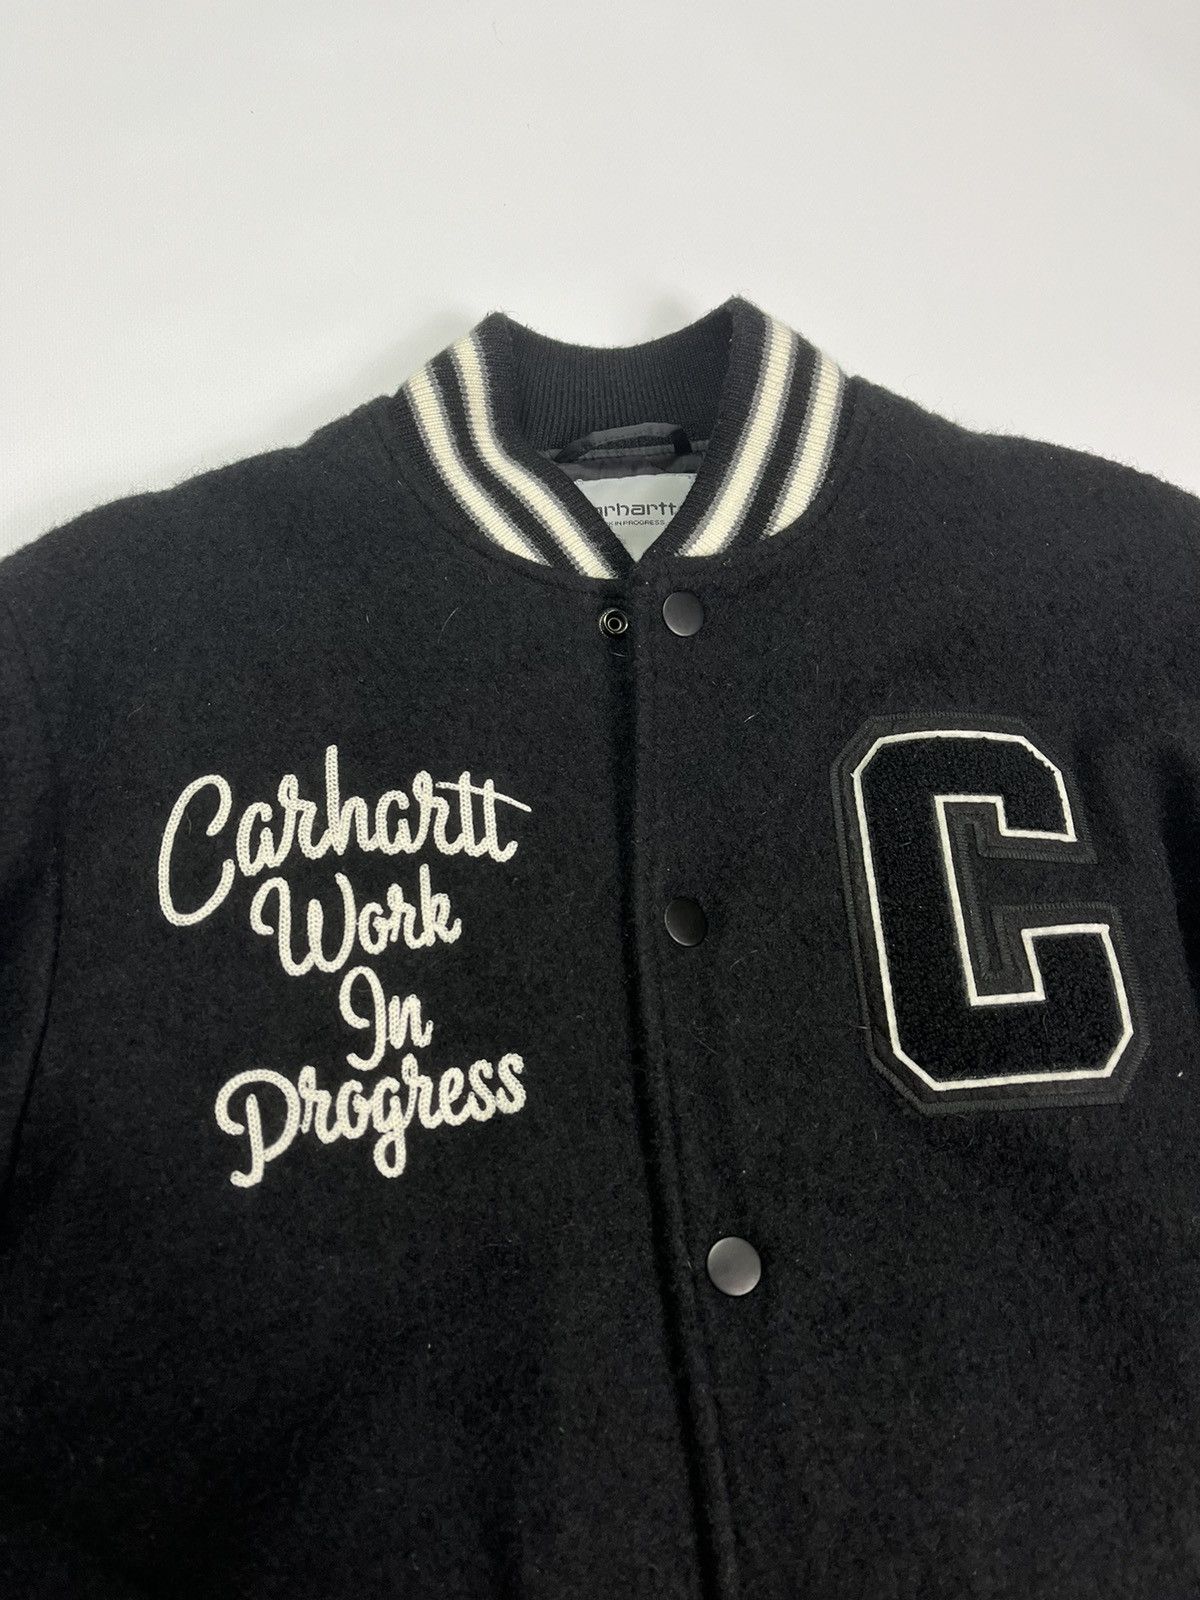 Carhartt Carhartt WIP Pembroke Varsity jacket | Grailed